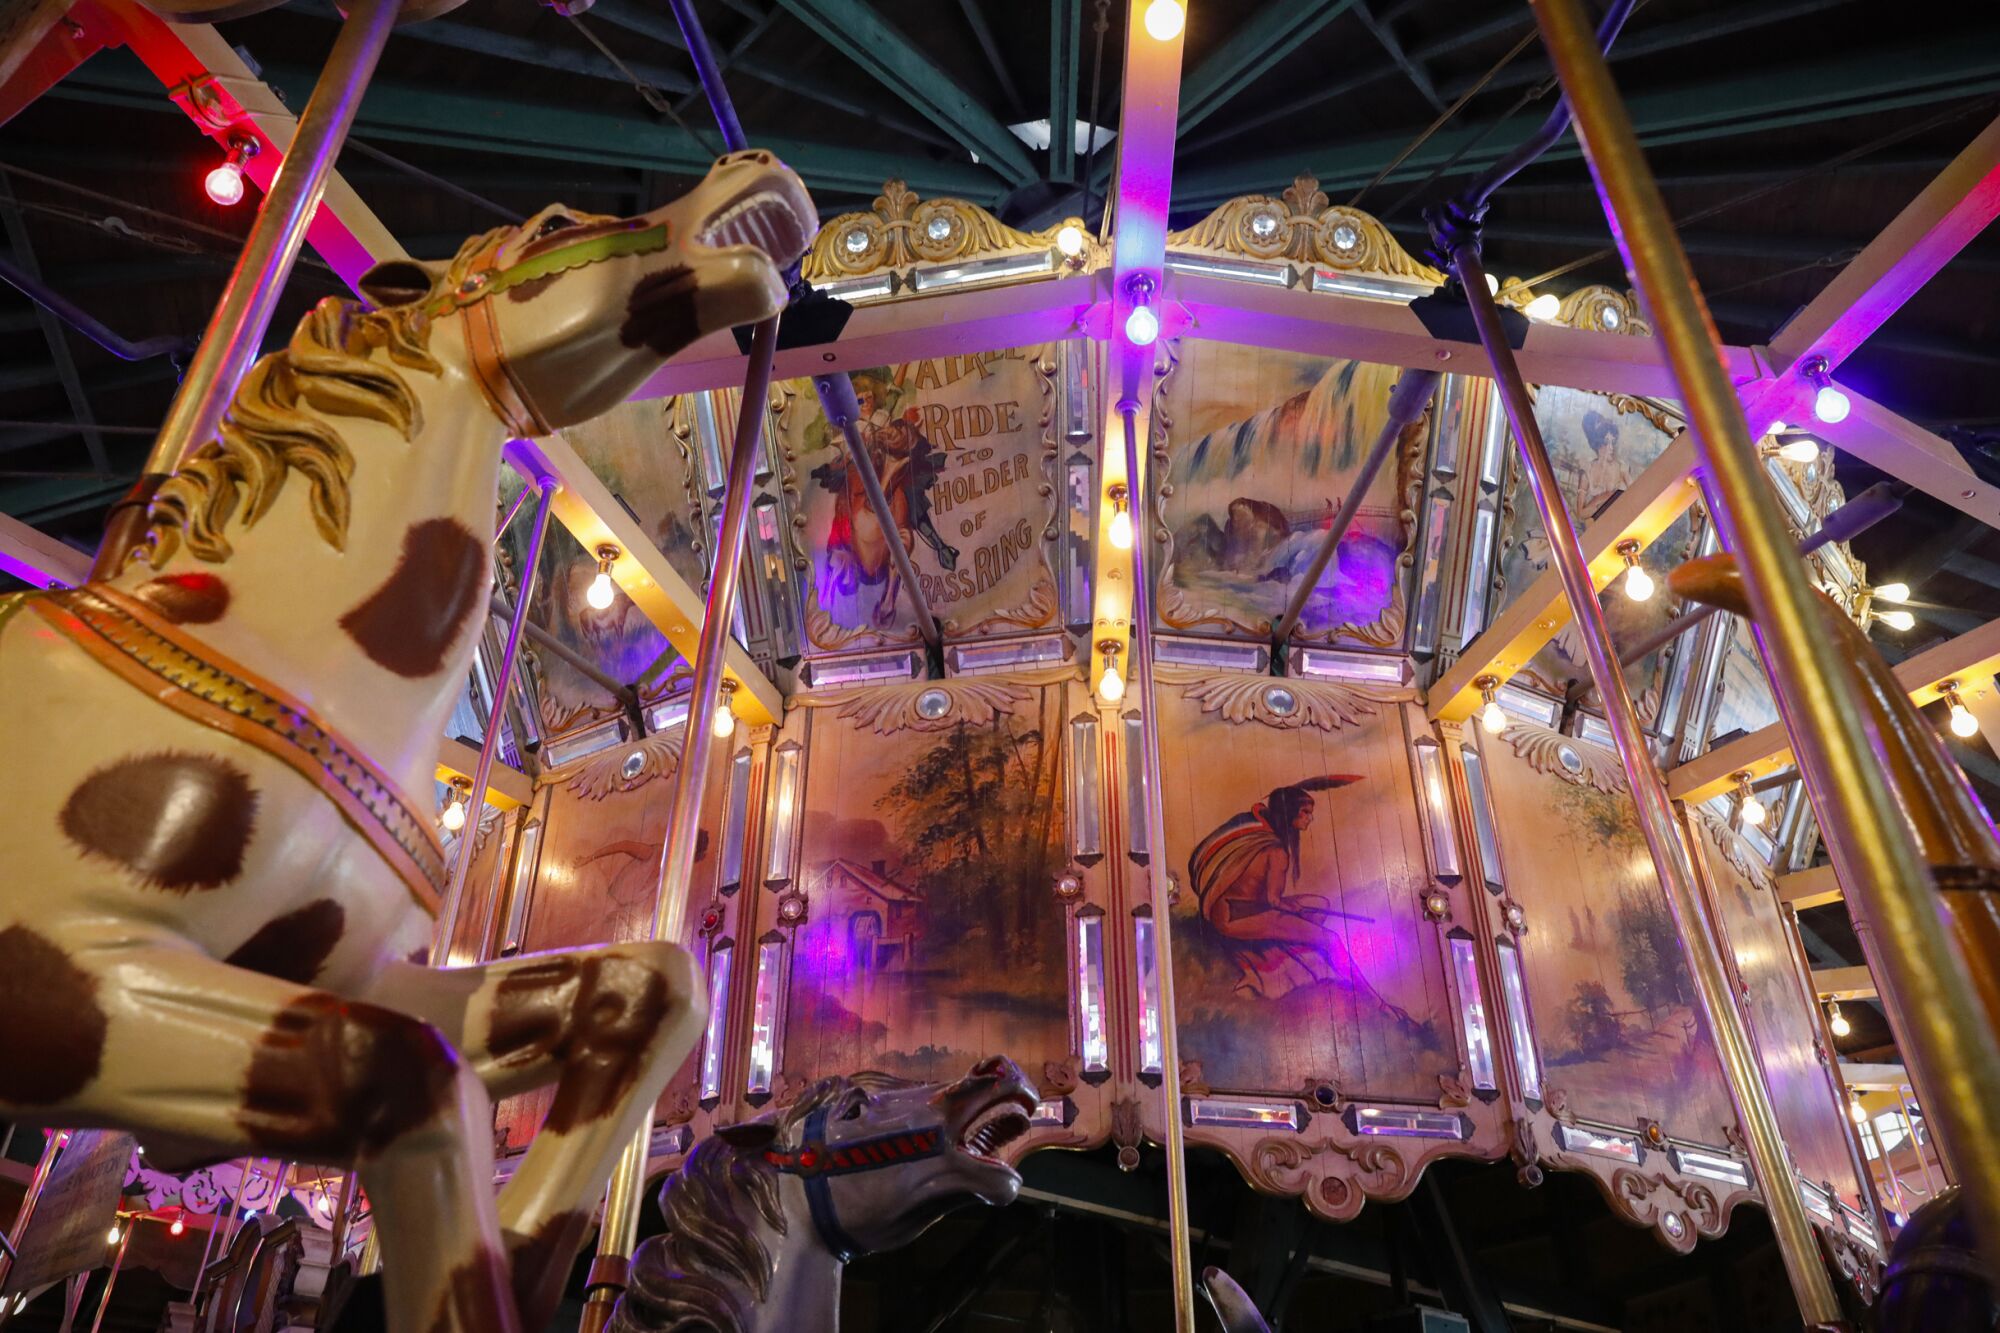 The Balboa Park Carousel lighted up.